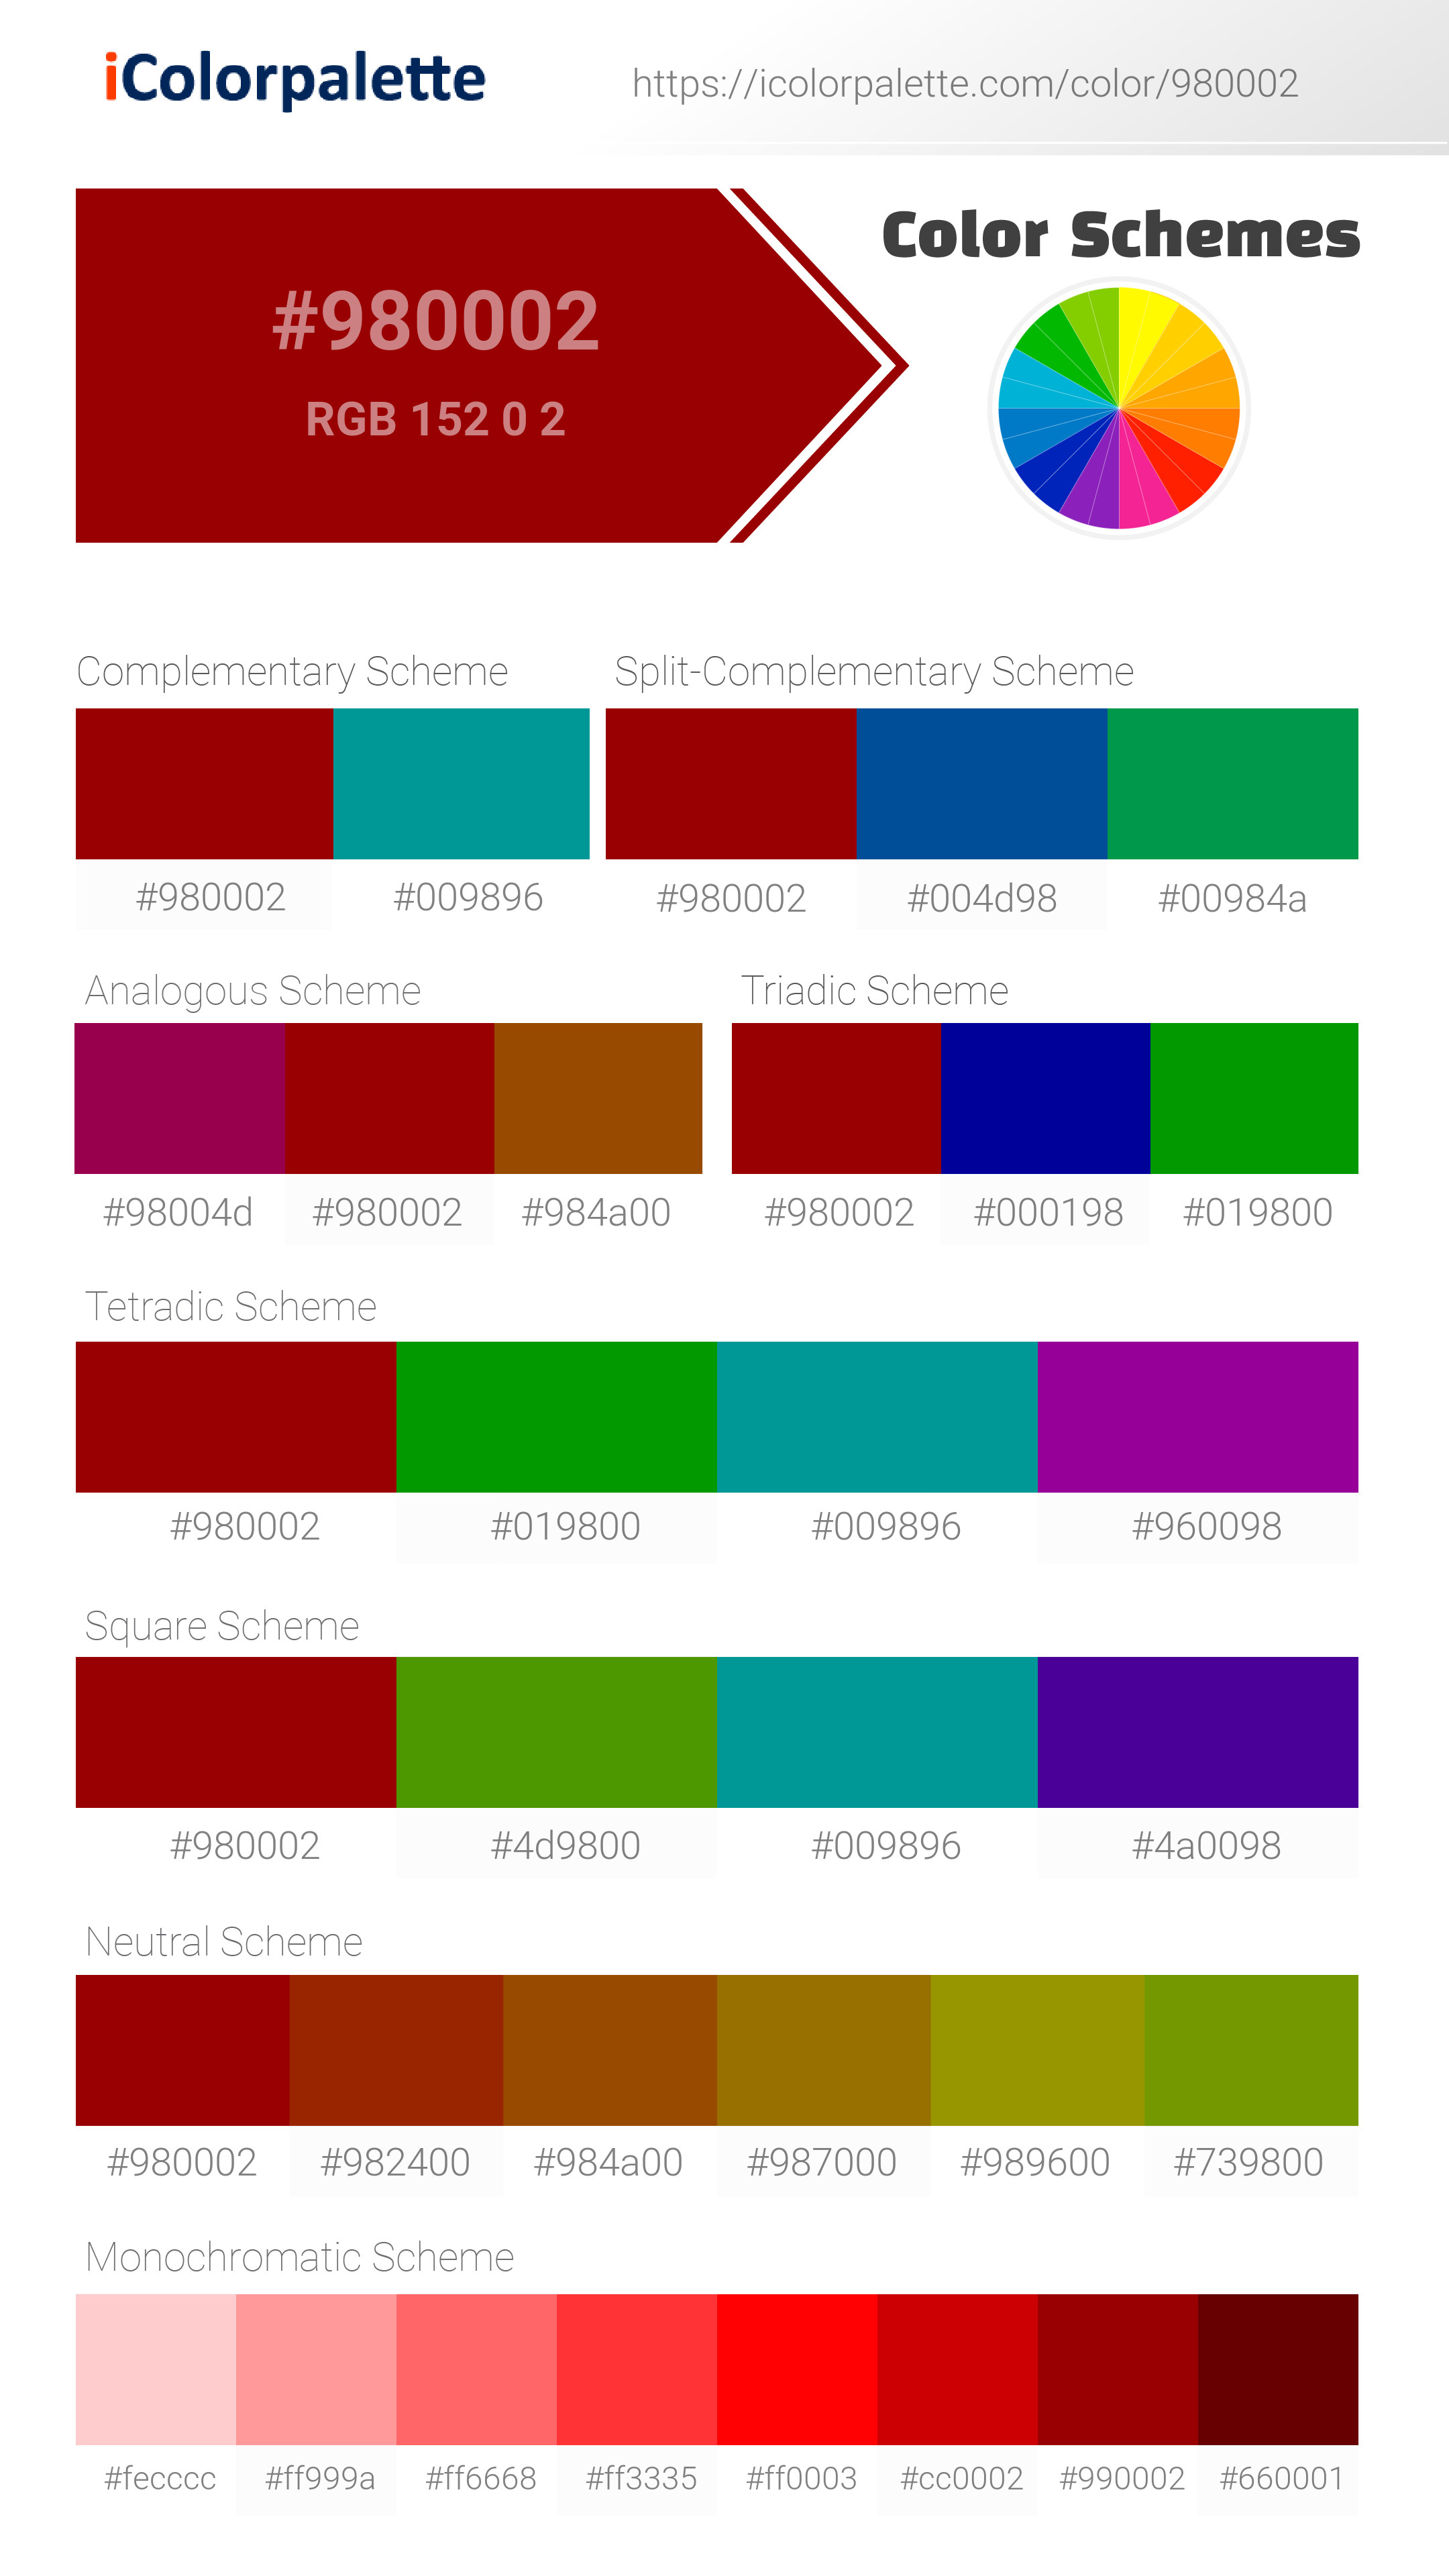 https://www.icolorpalette.com/download/schemes/980002_colorschemes_icolorpalette.jpg